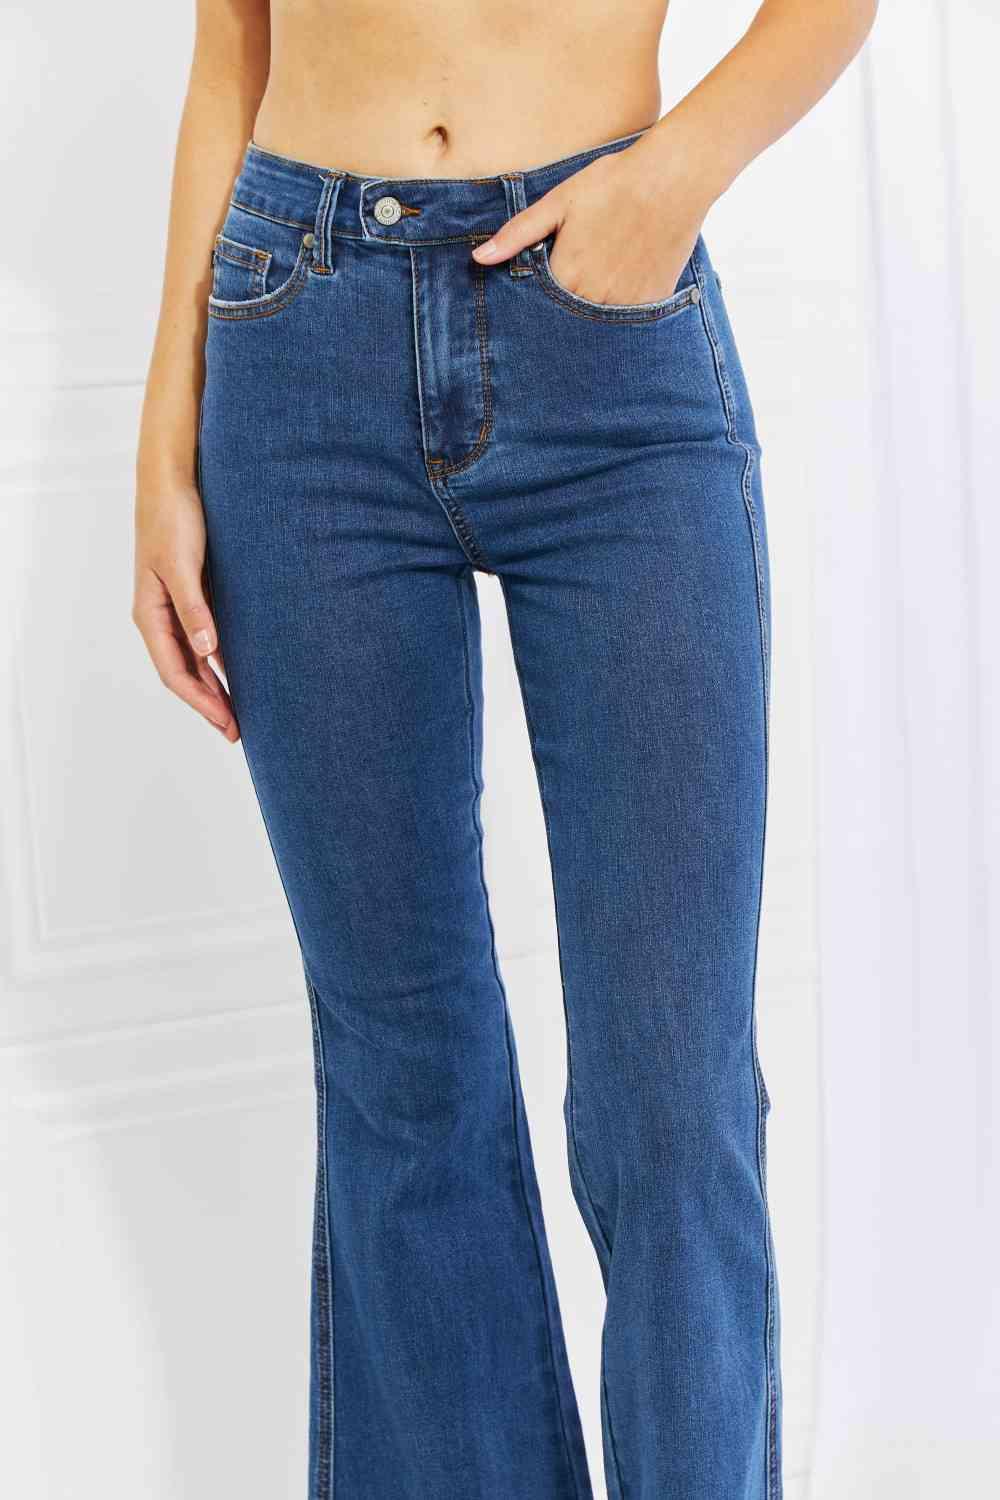 Judy Blue Ava Full Size Cool Jeans Tummy Control Flare - Lab Fashion, Home & Health